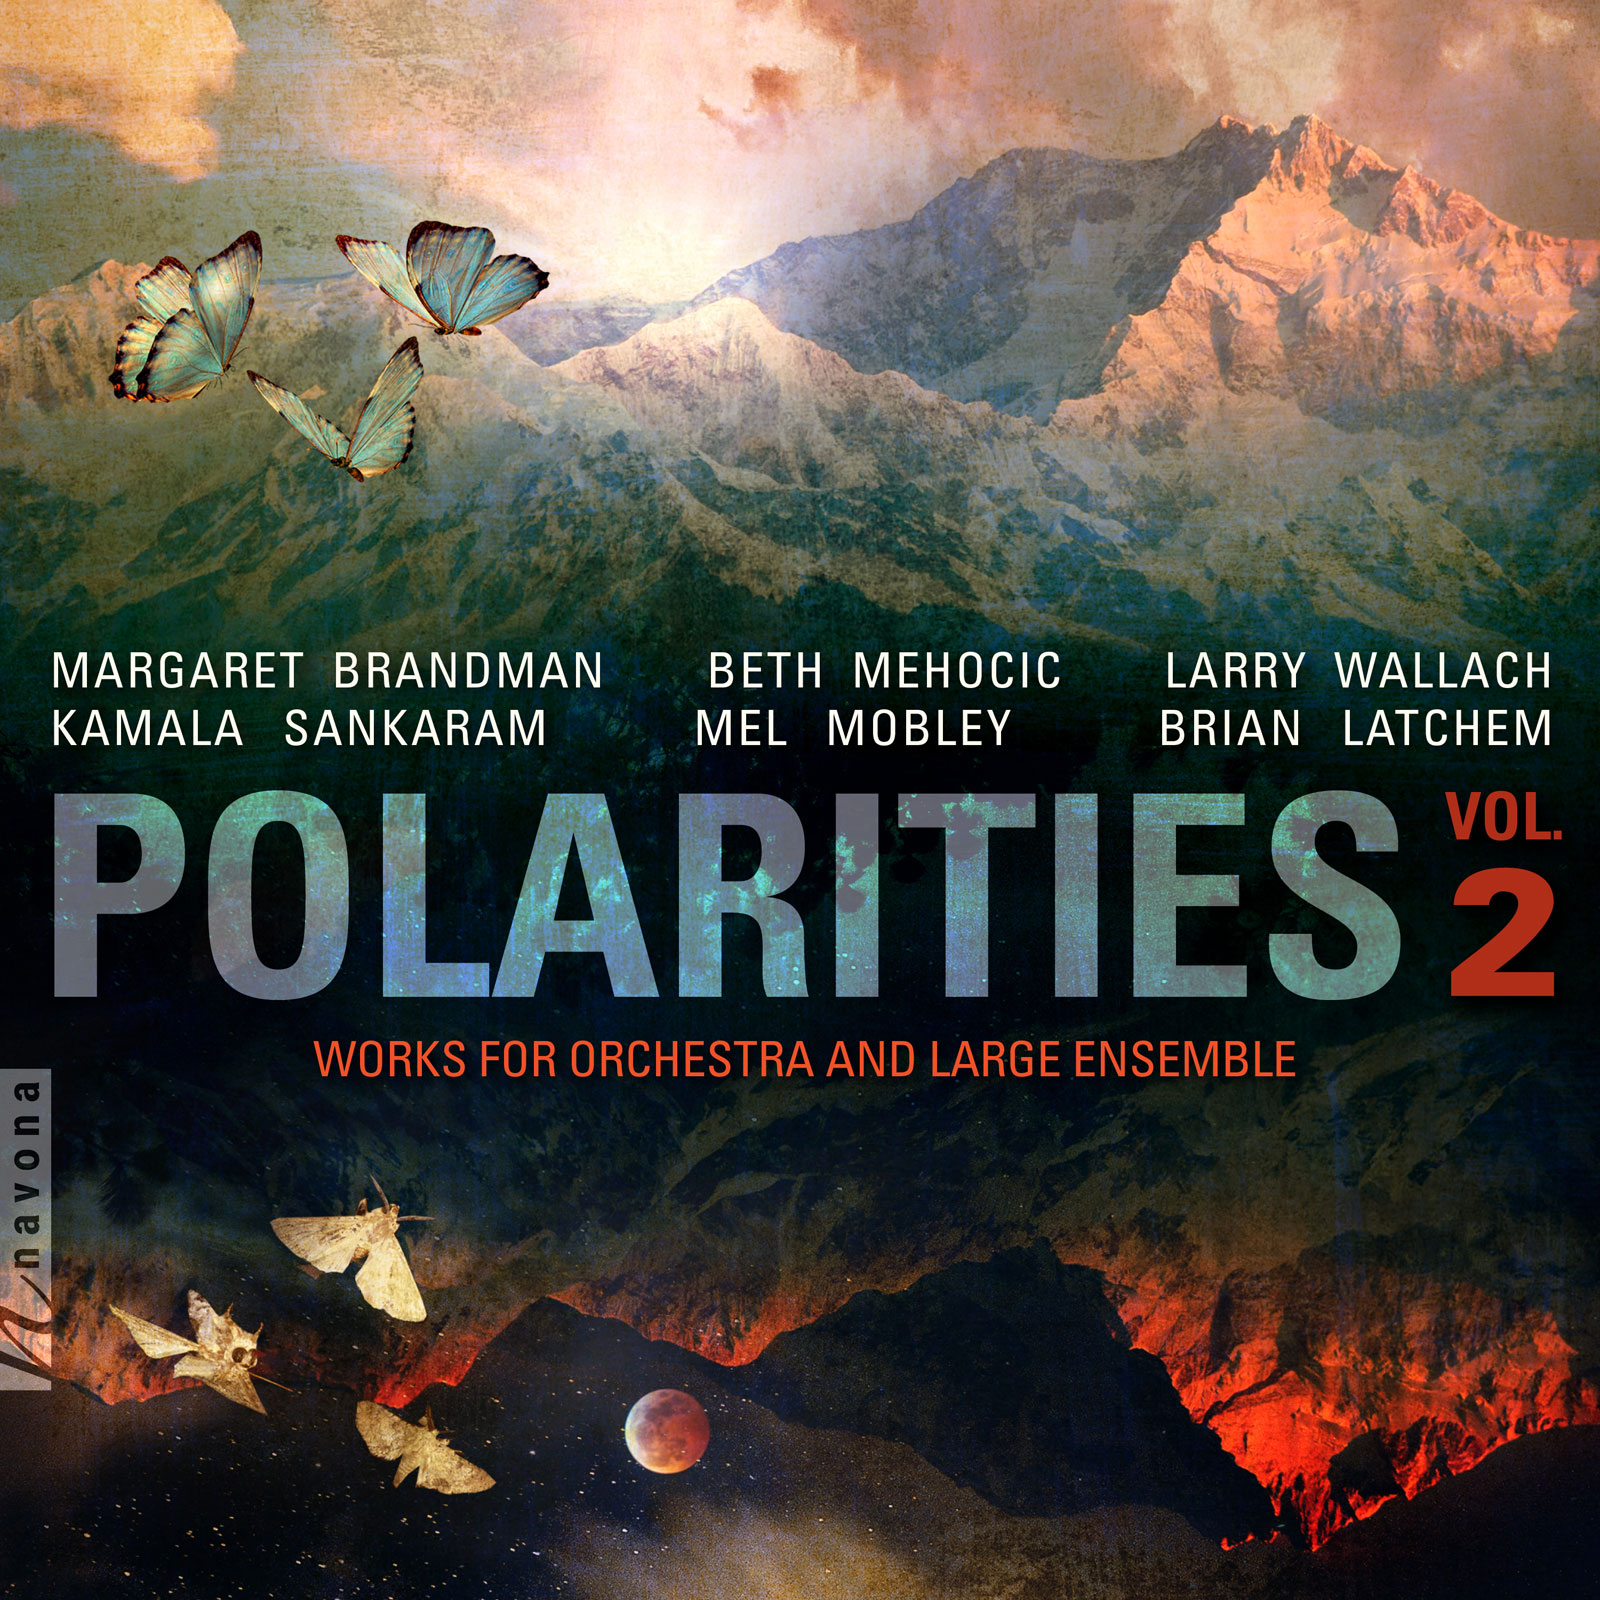 Polarities Vol. 2